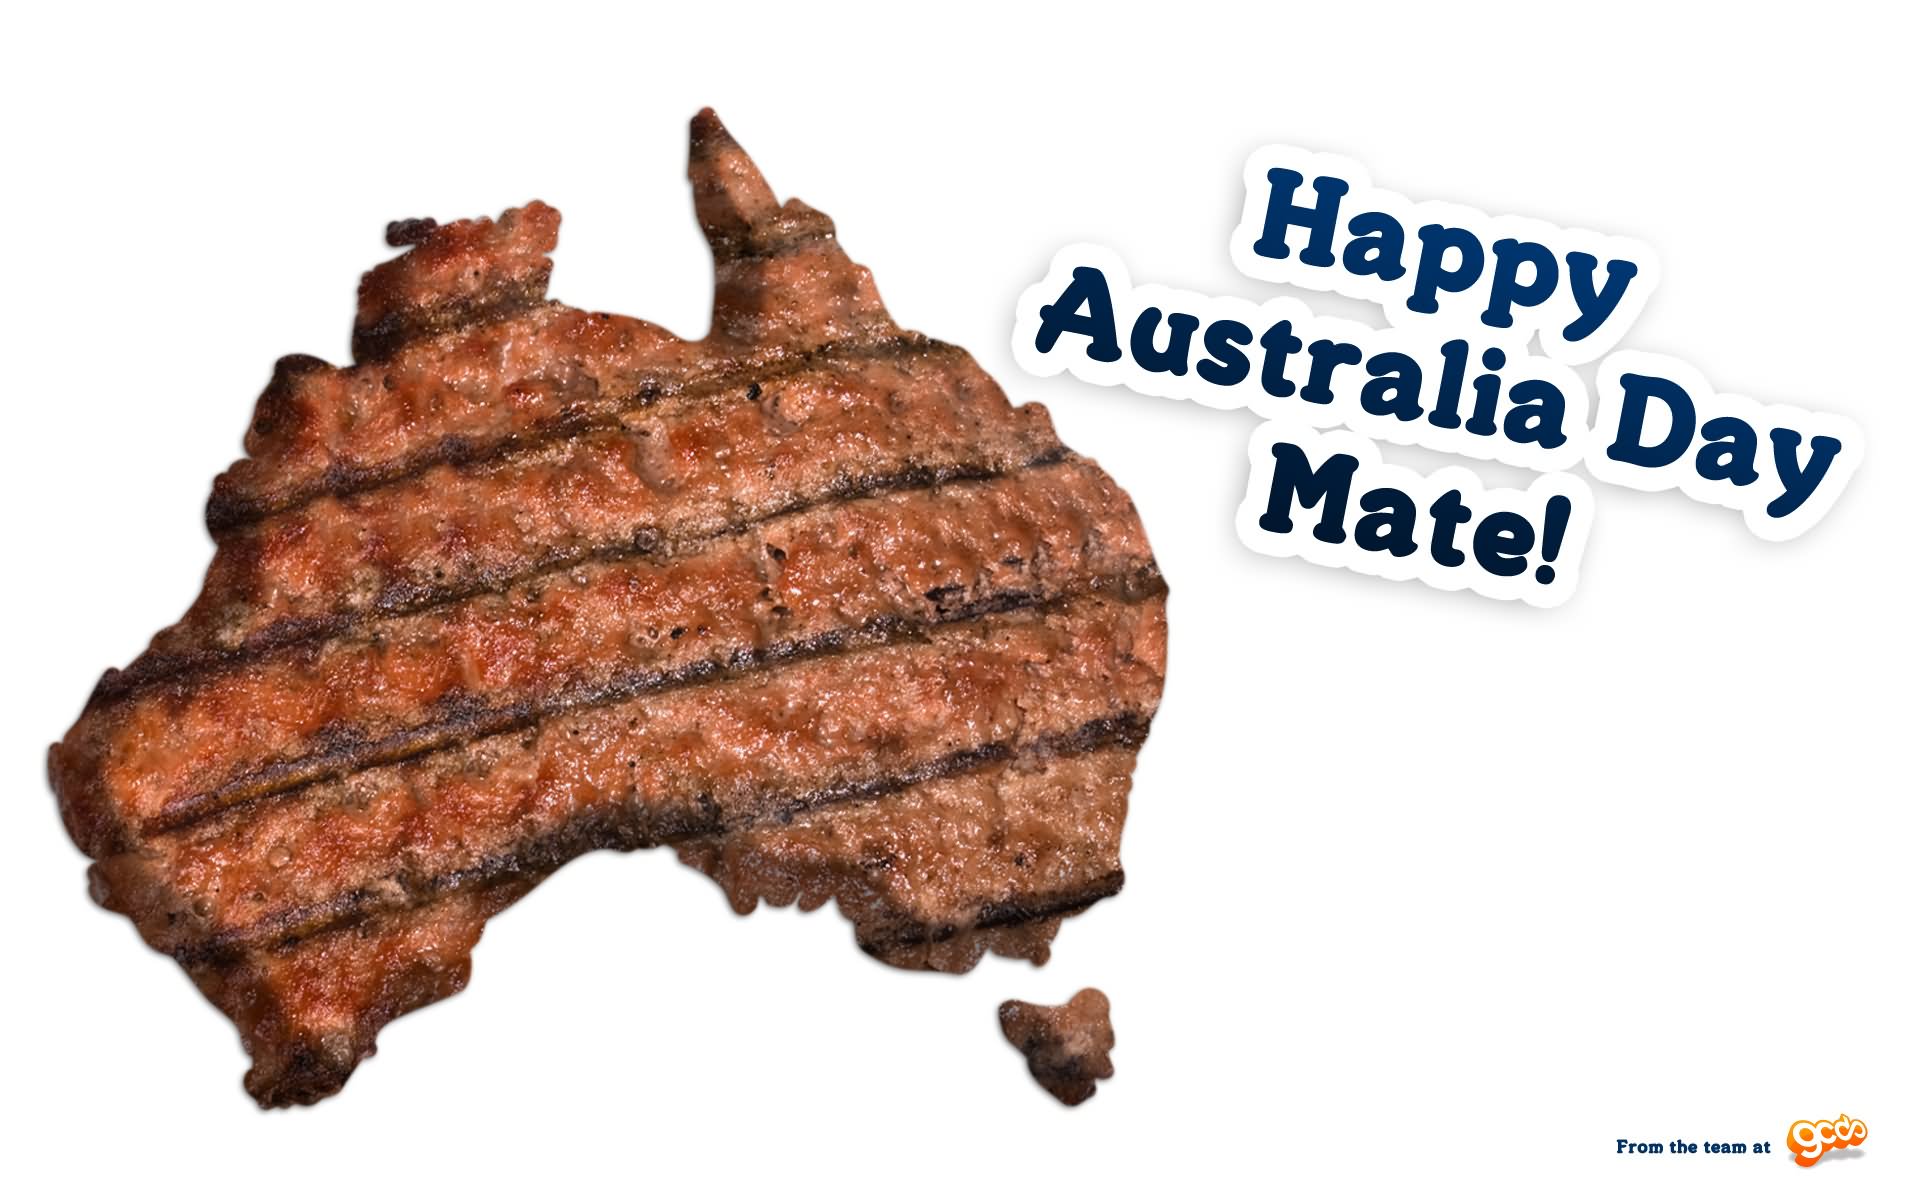 Happy Australia Day Mate Wishes